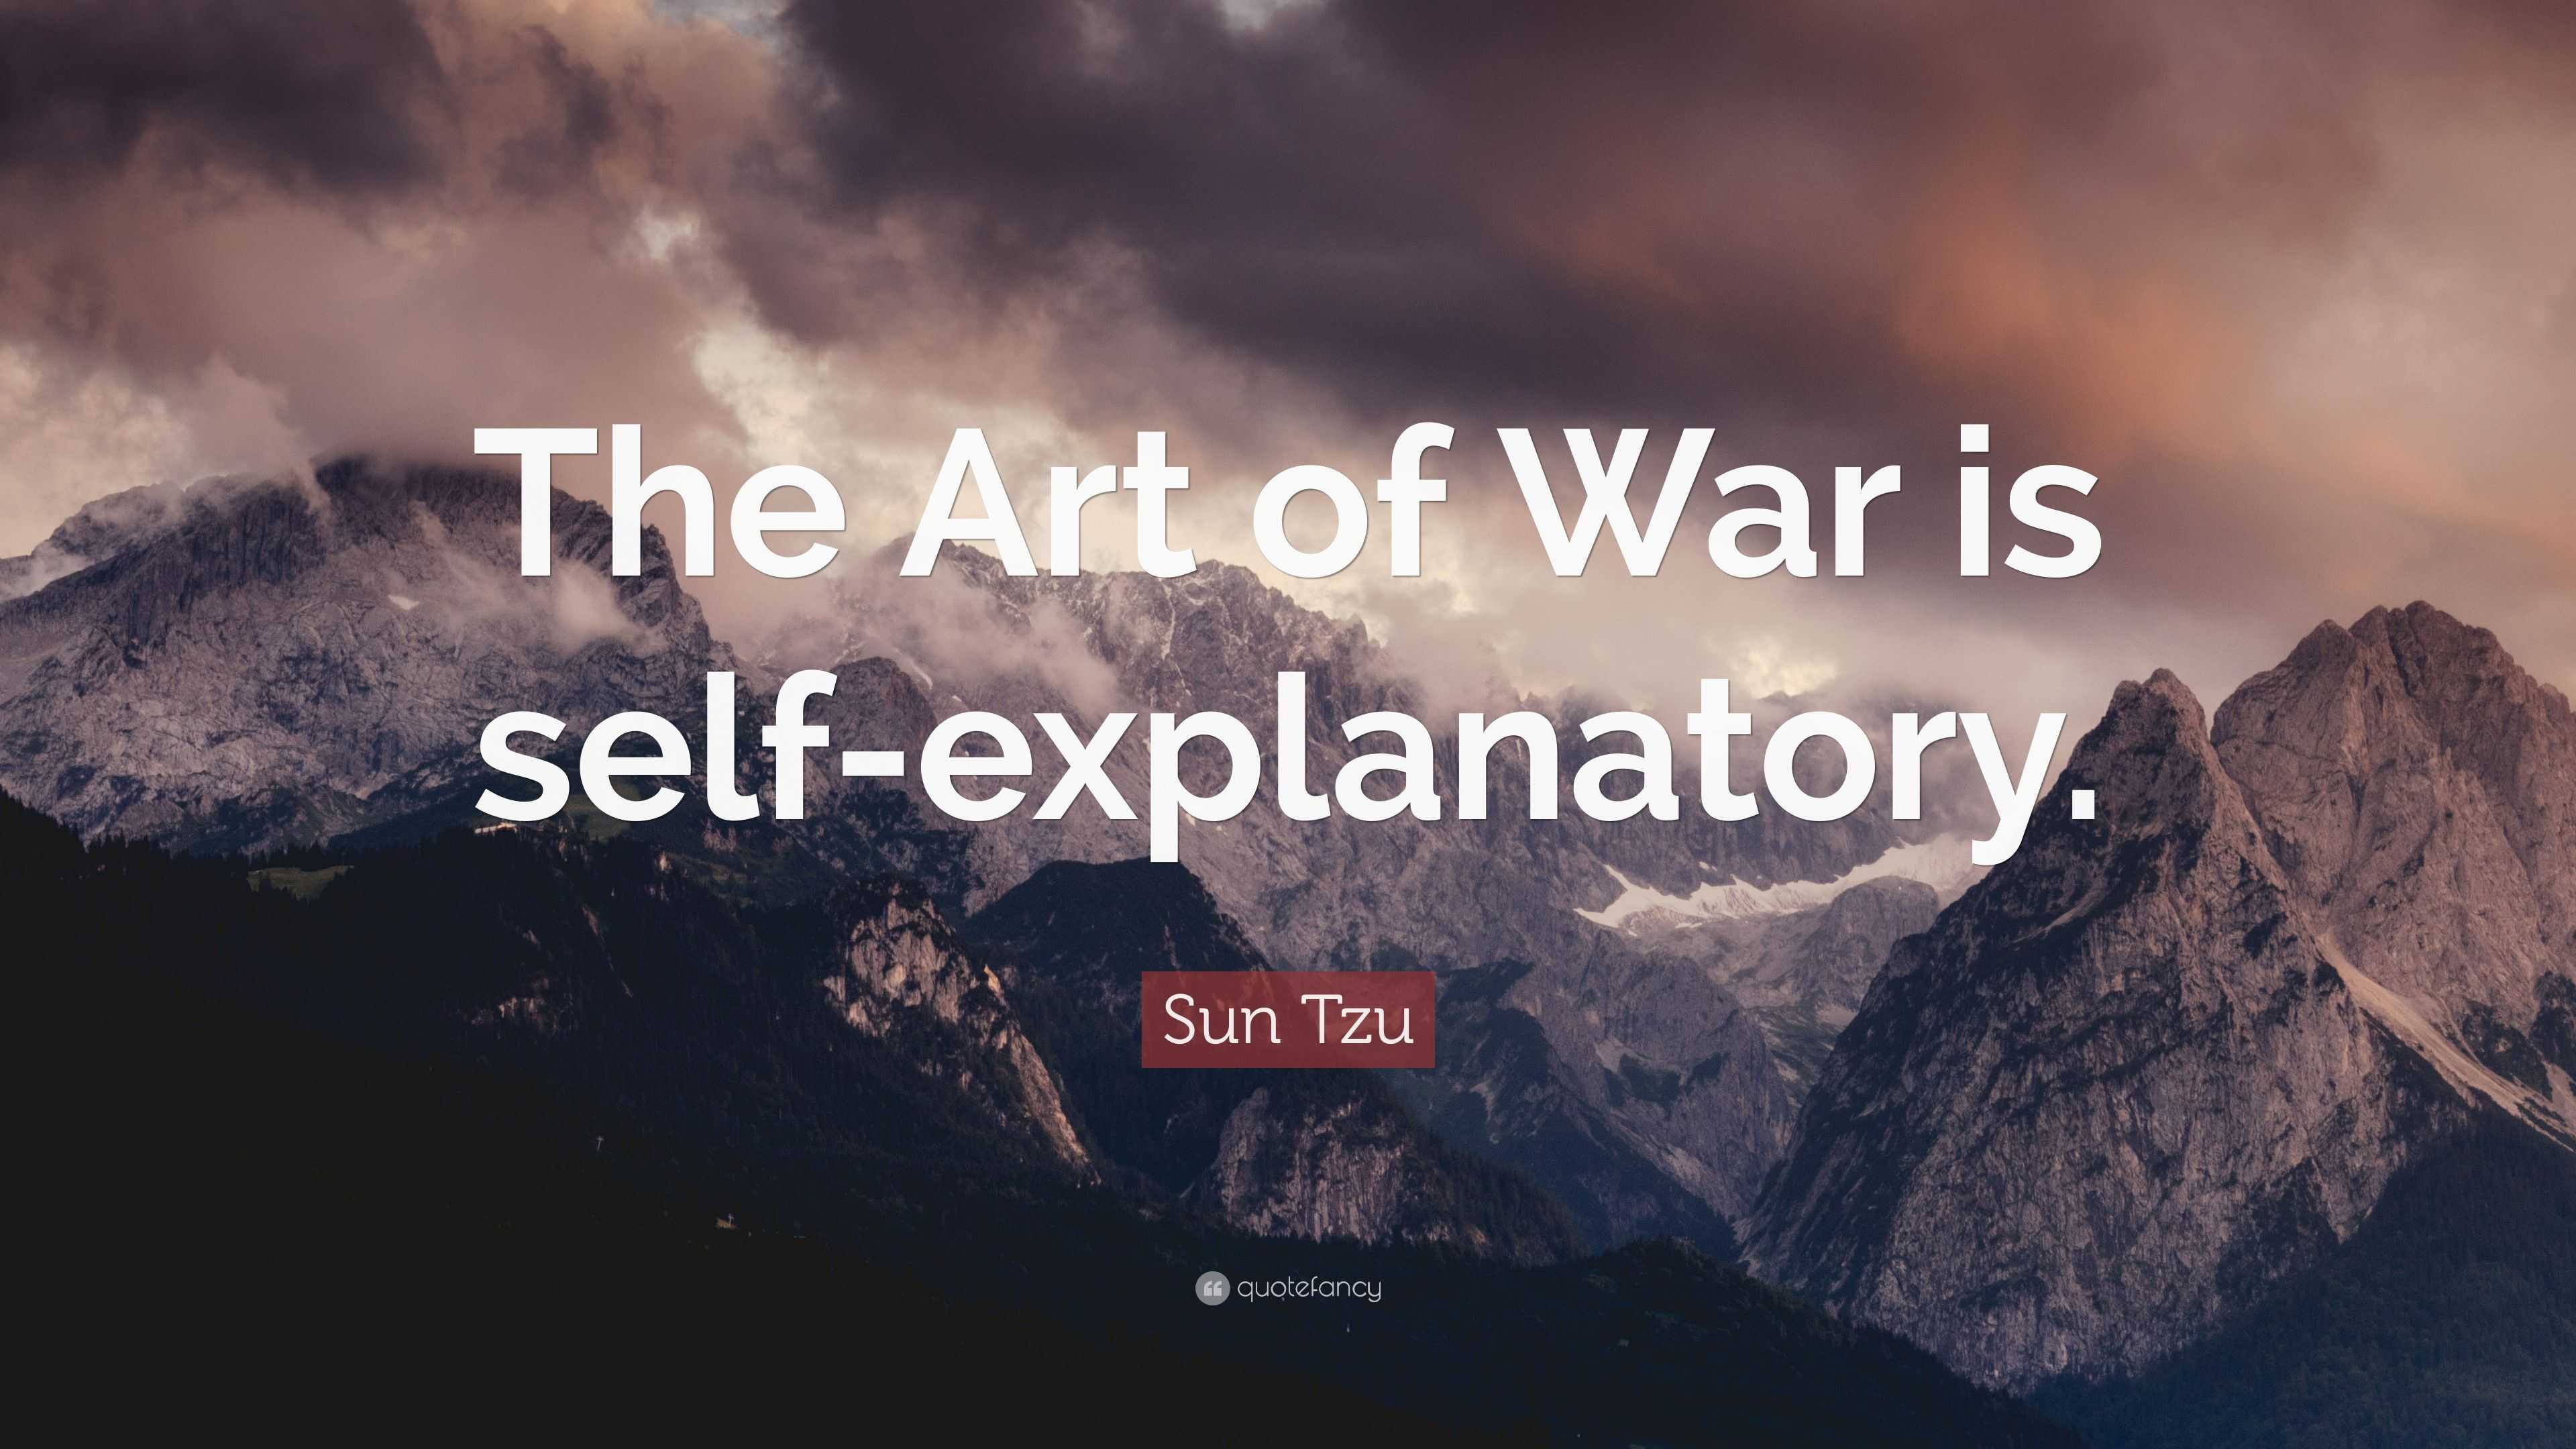 Sun Tzu Quote: “The Art of War is self-explanatory.”